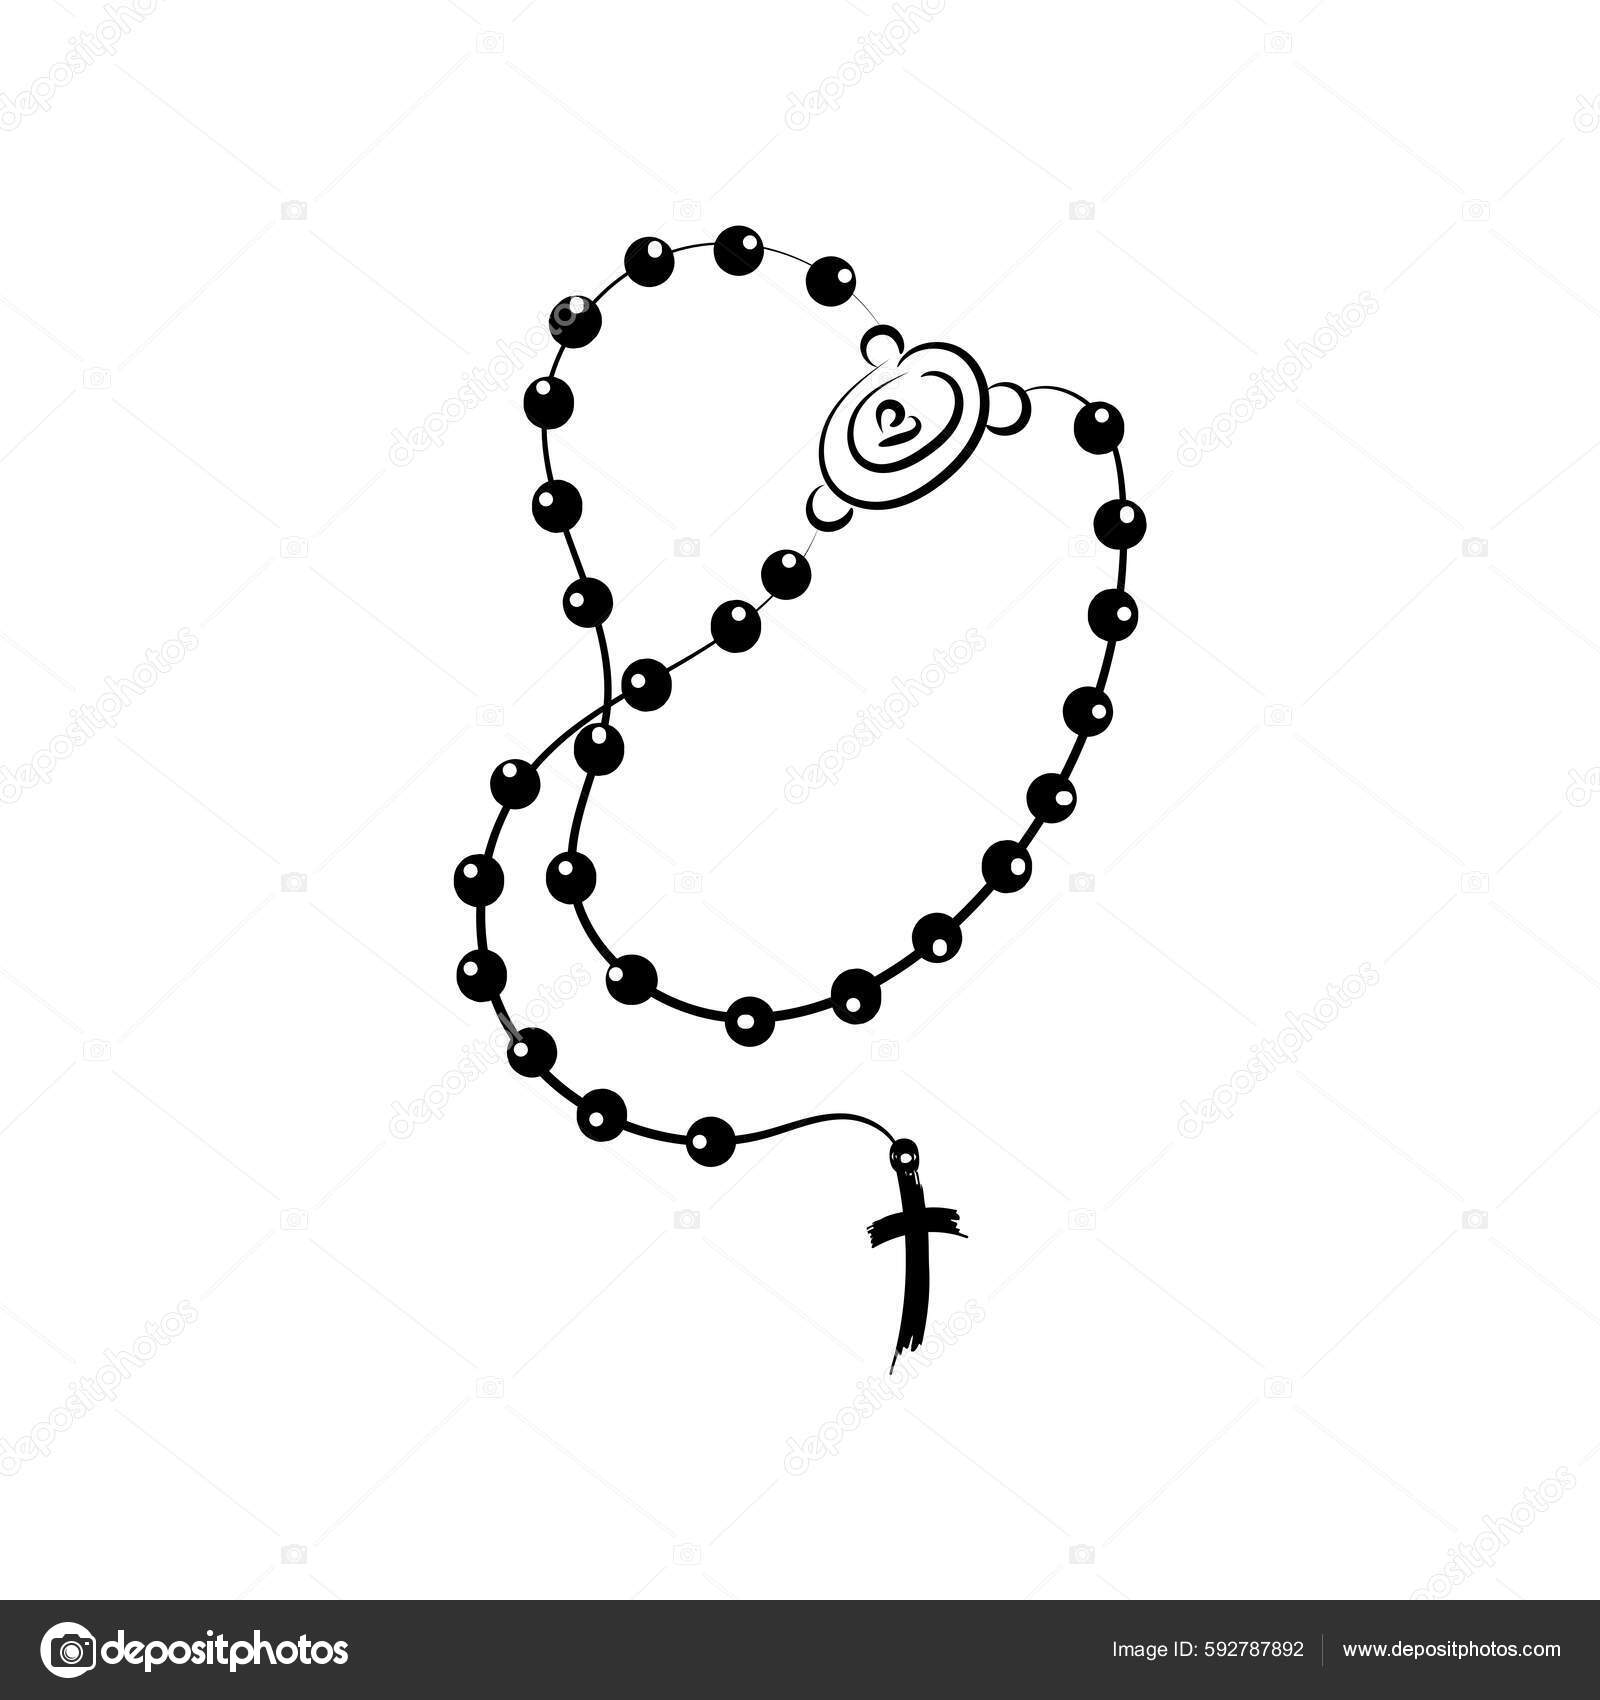 1600 Rosary Beads Illustrations RoyaltyFree Vector Graphics  Clip Art   iStock  Catholic rosary beads Cross and rosary beads